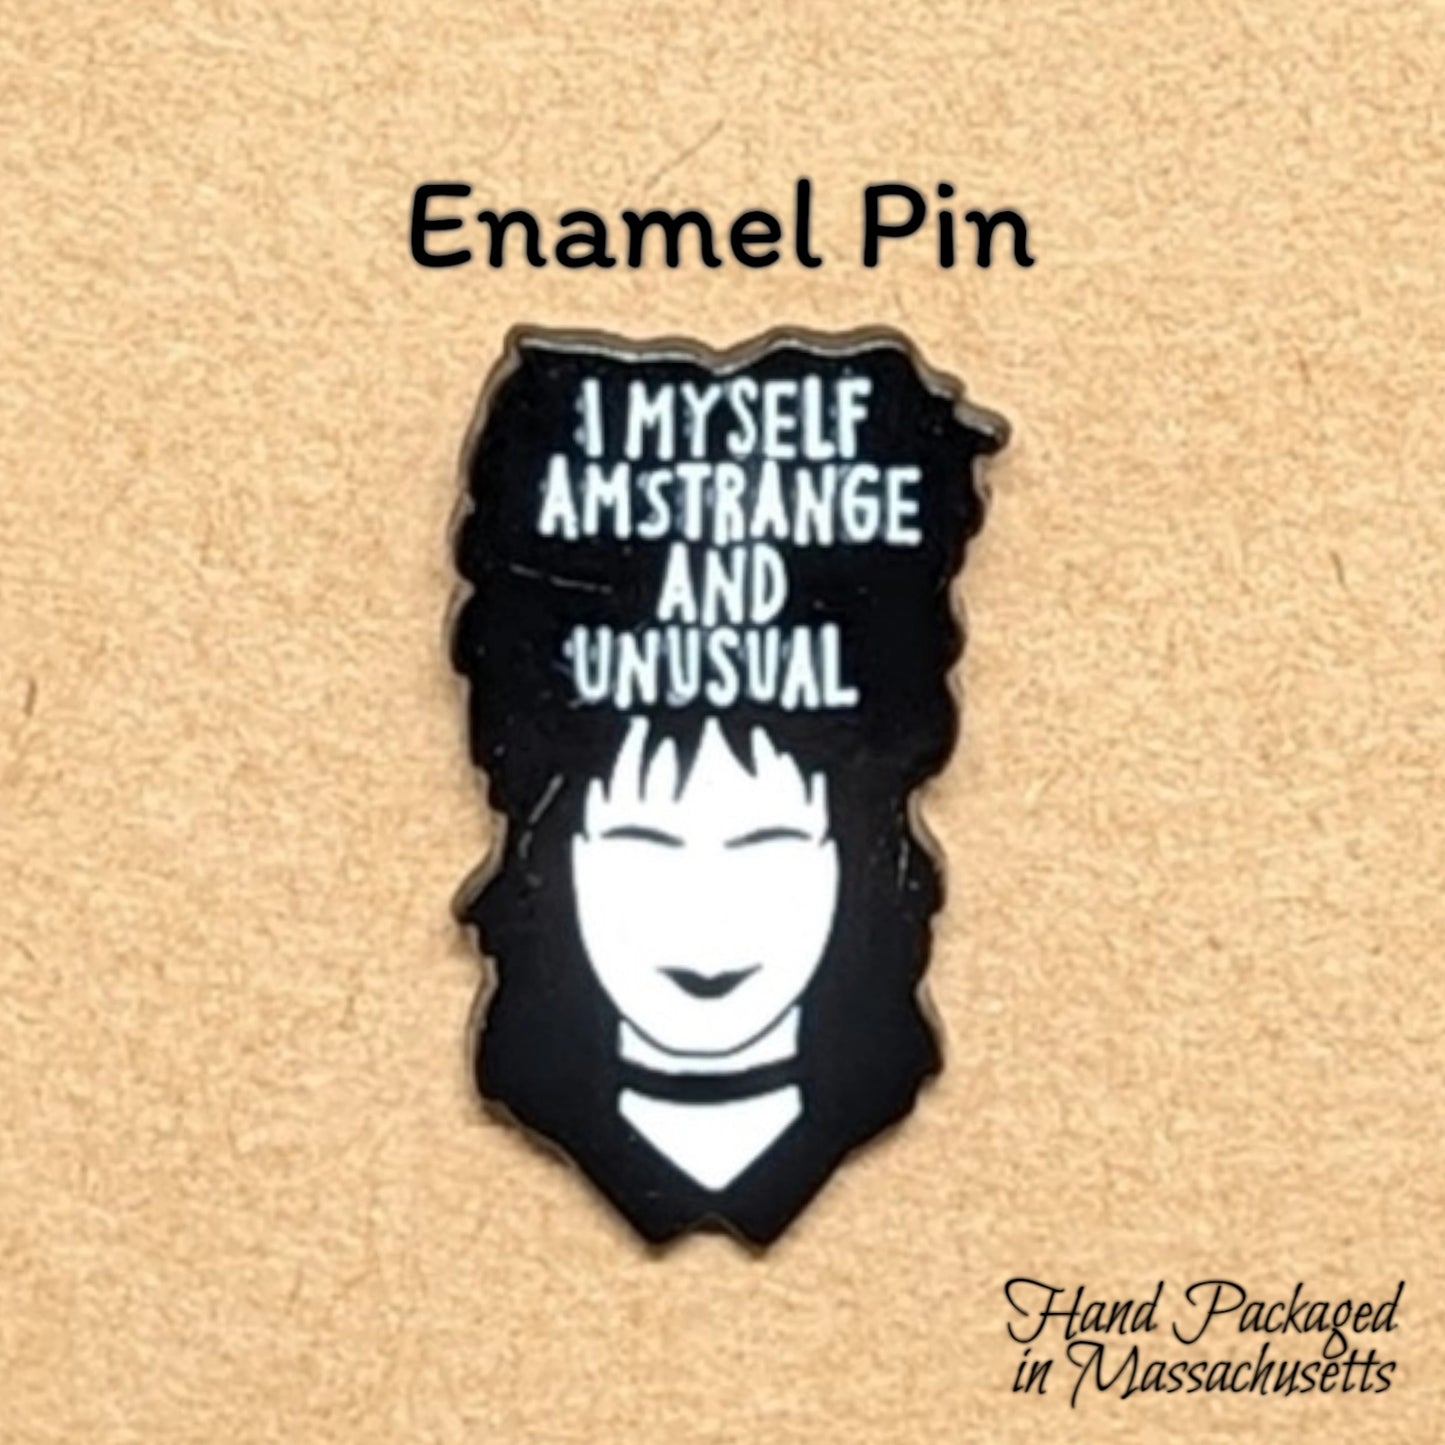 I myself am strange and unusual Enamel Pin #119